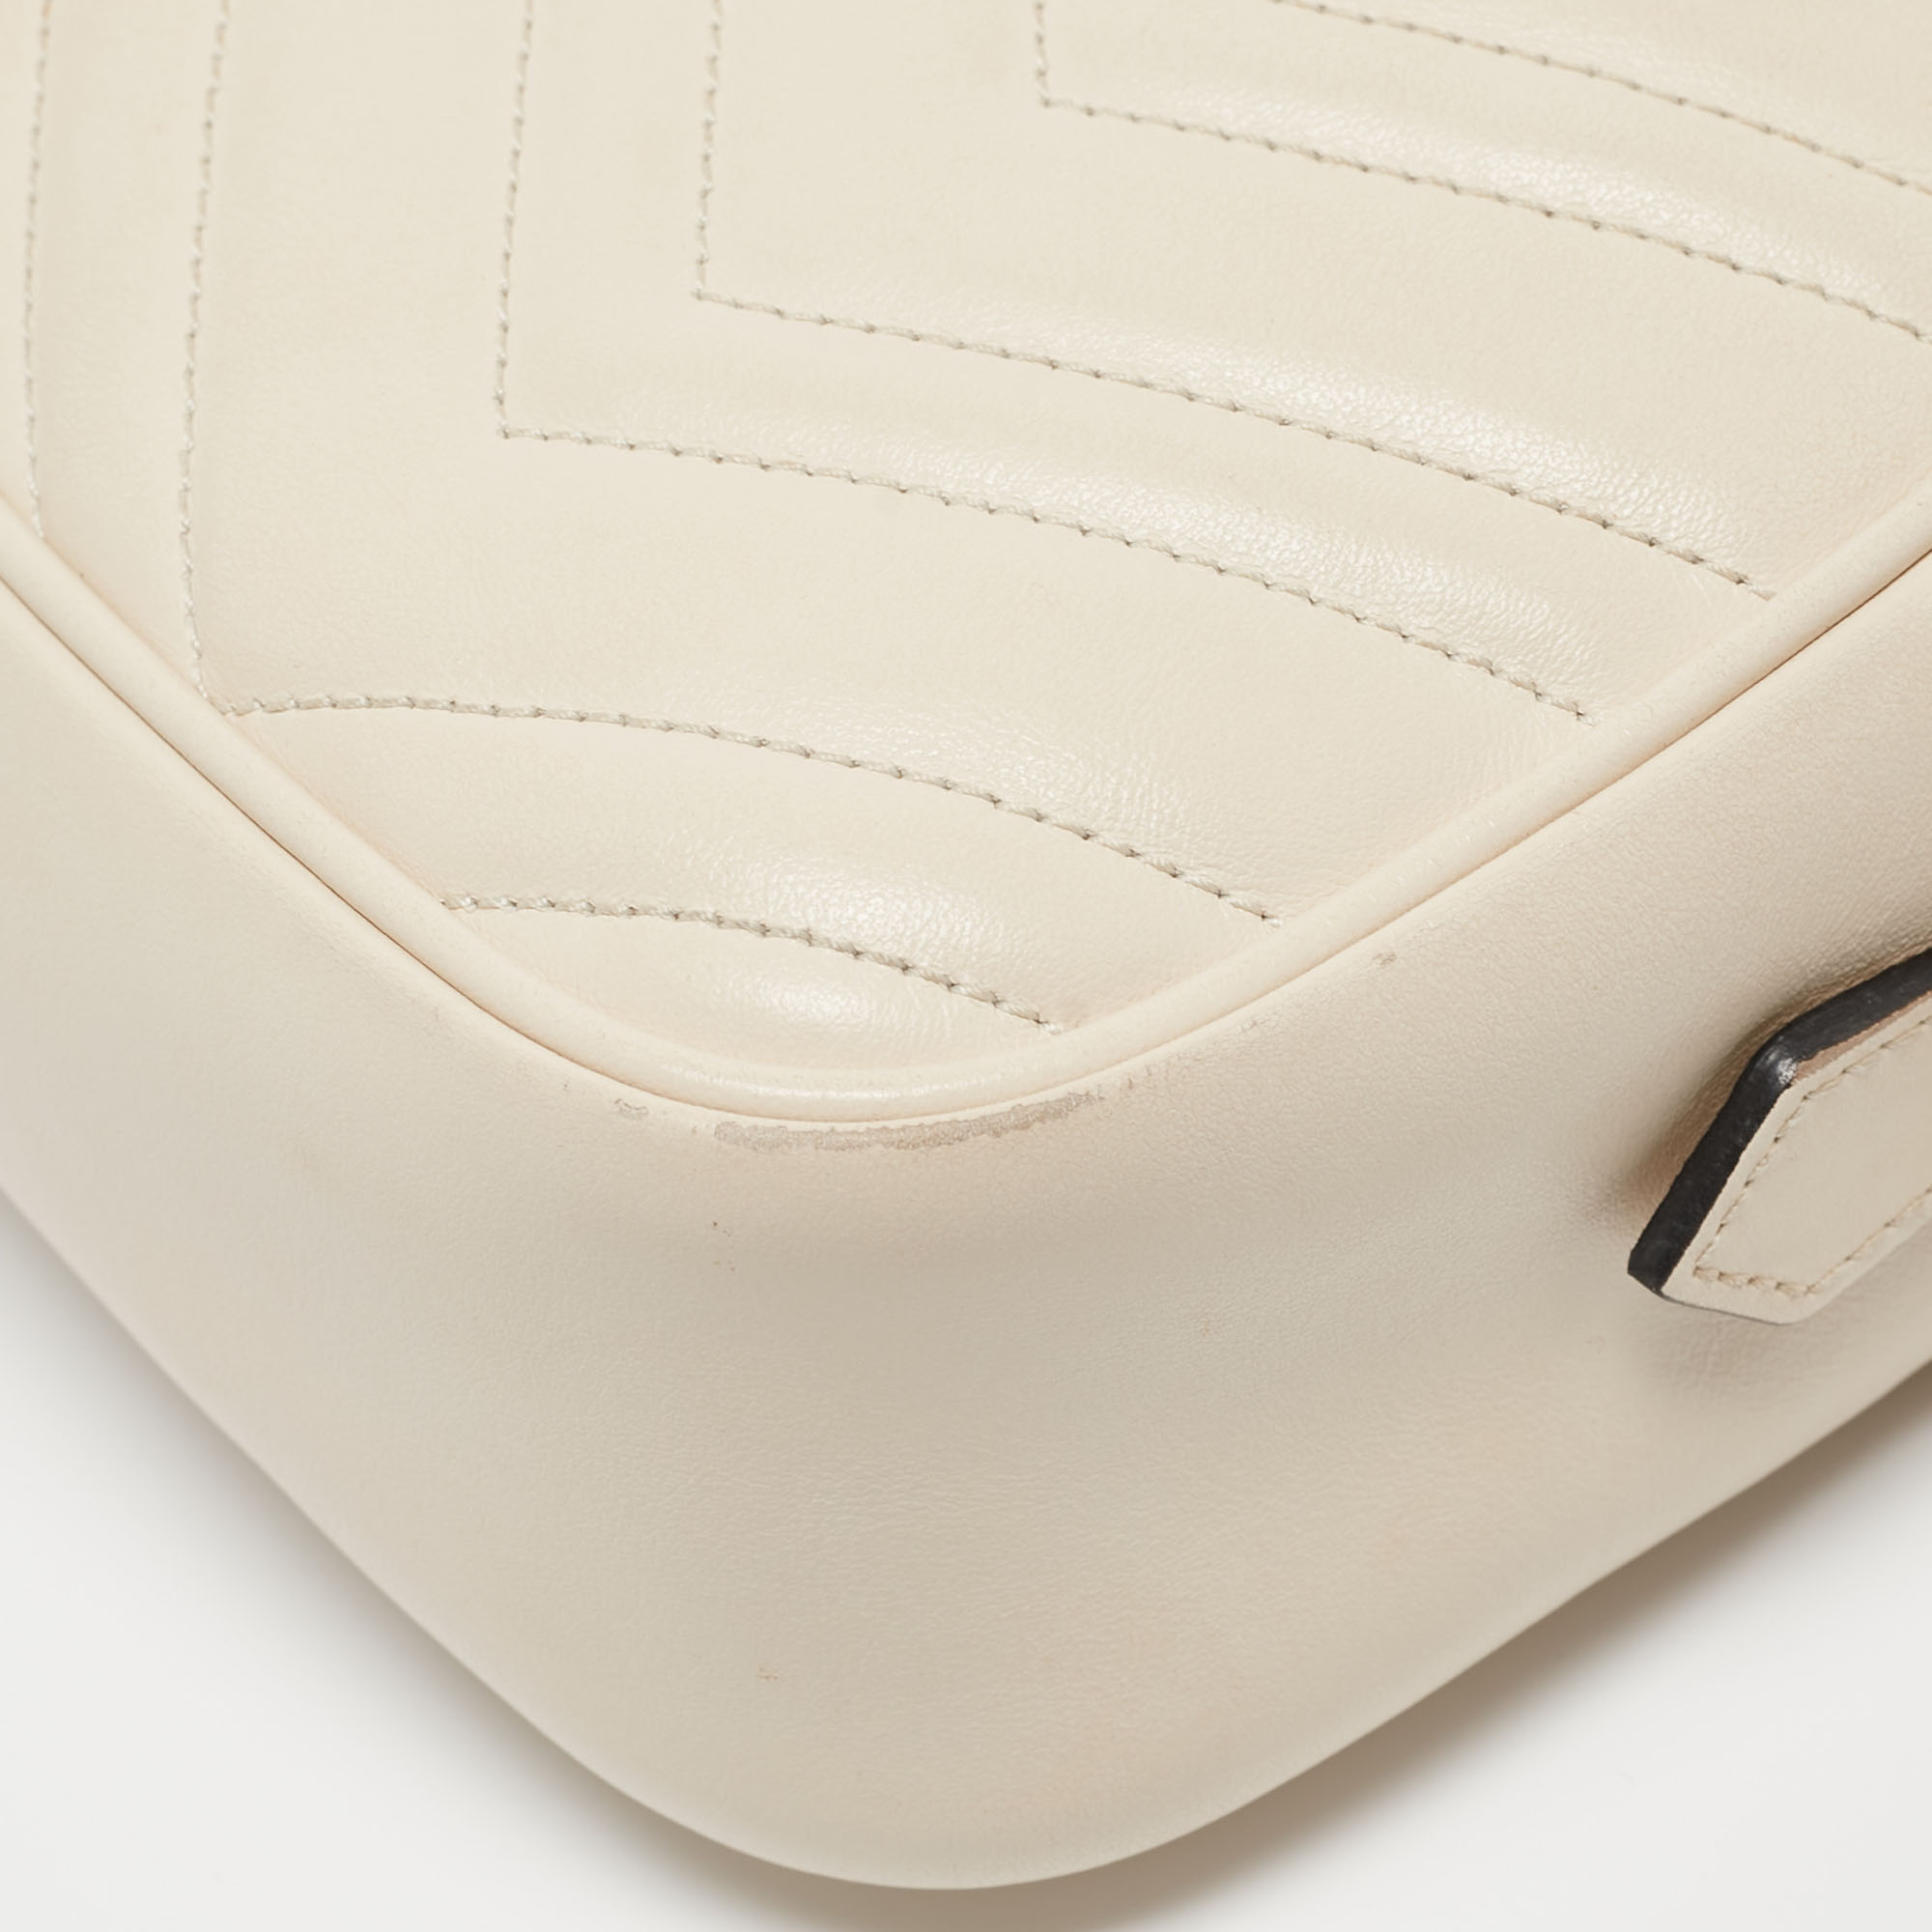 Gucci OFF White Matelassé Leather Small GG Marmont Shoulder Bag